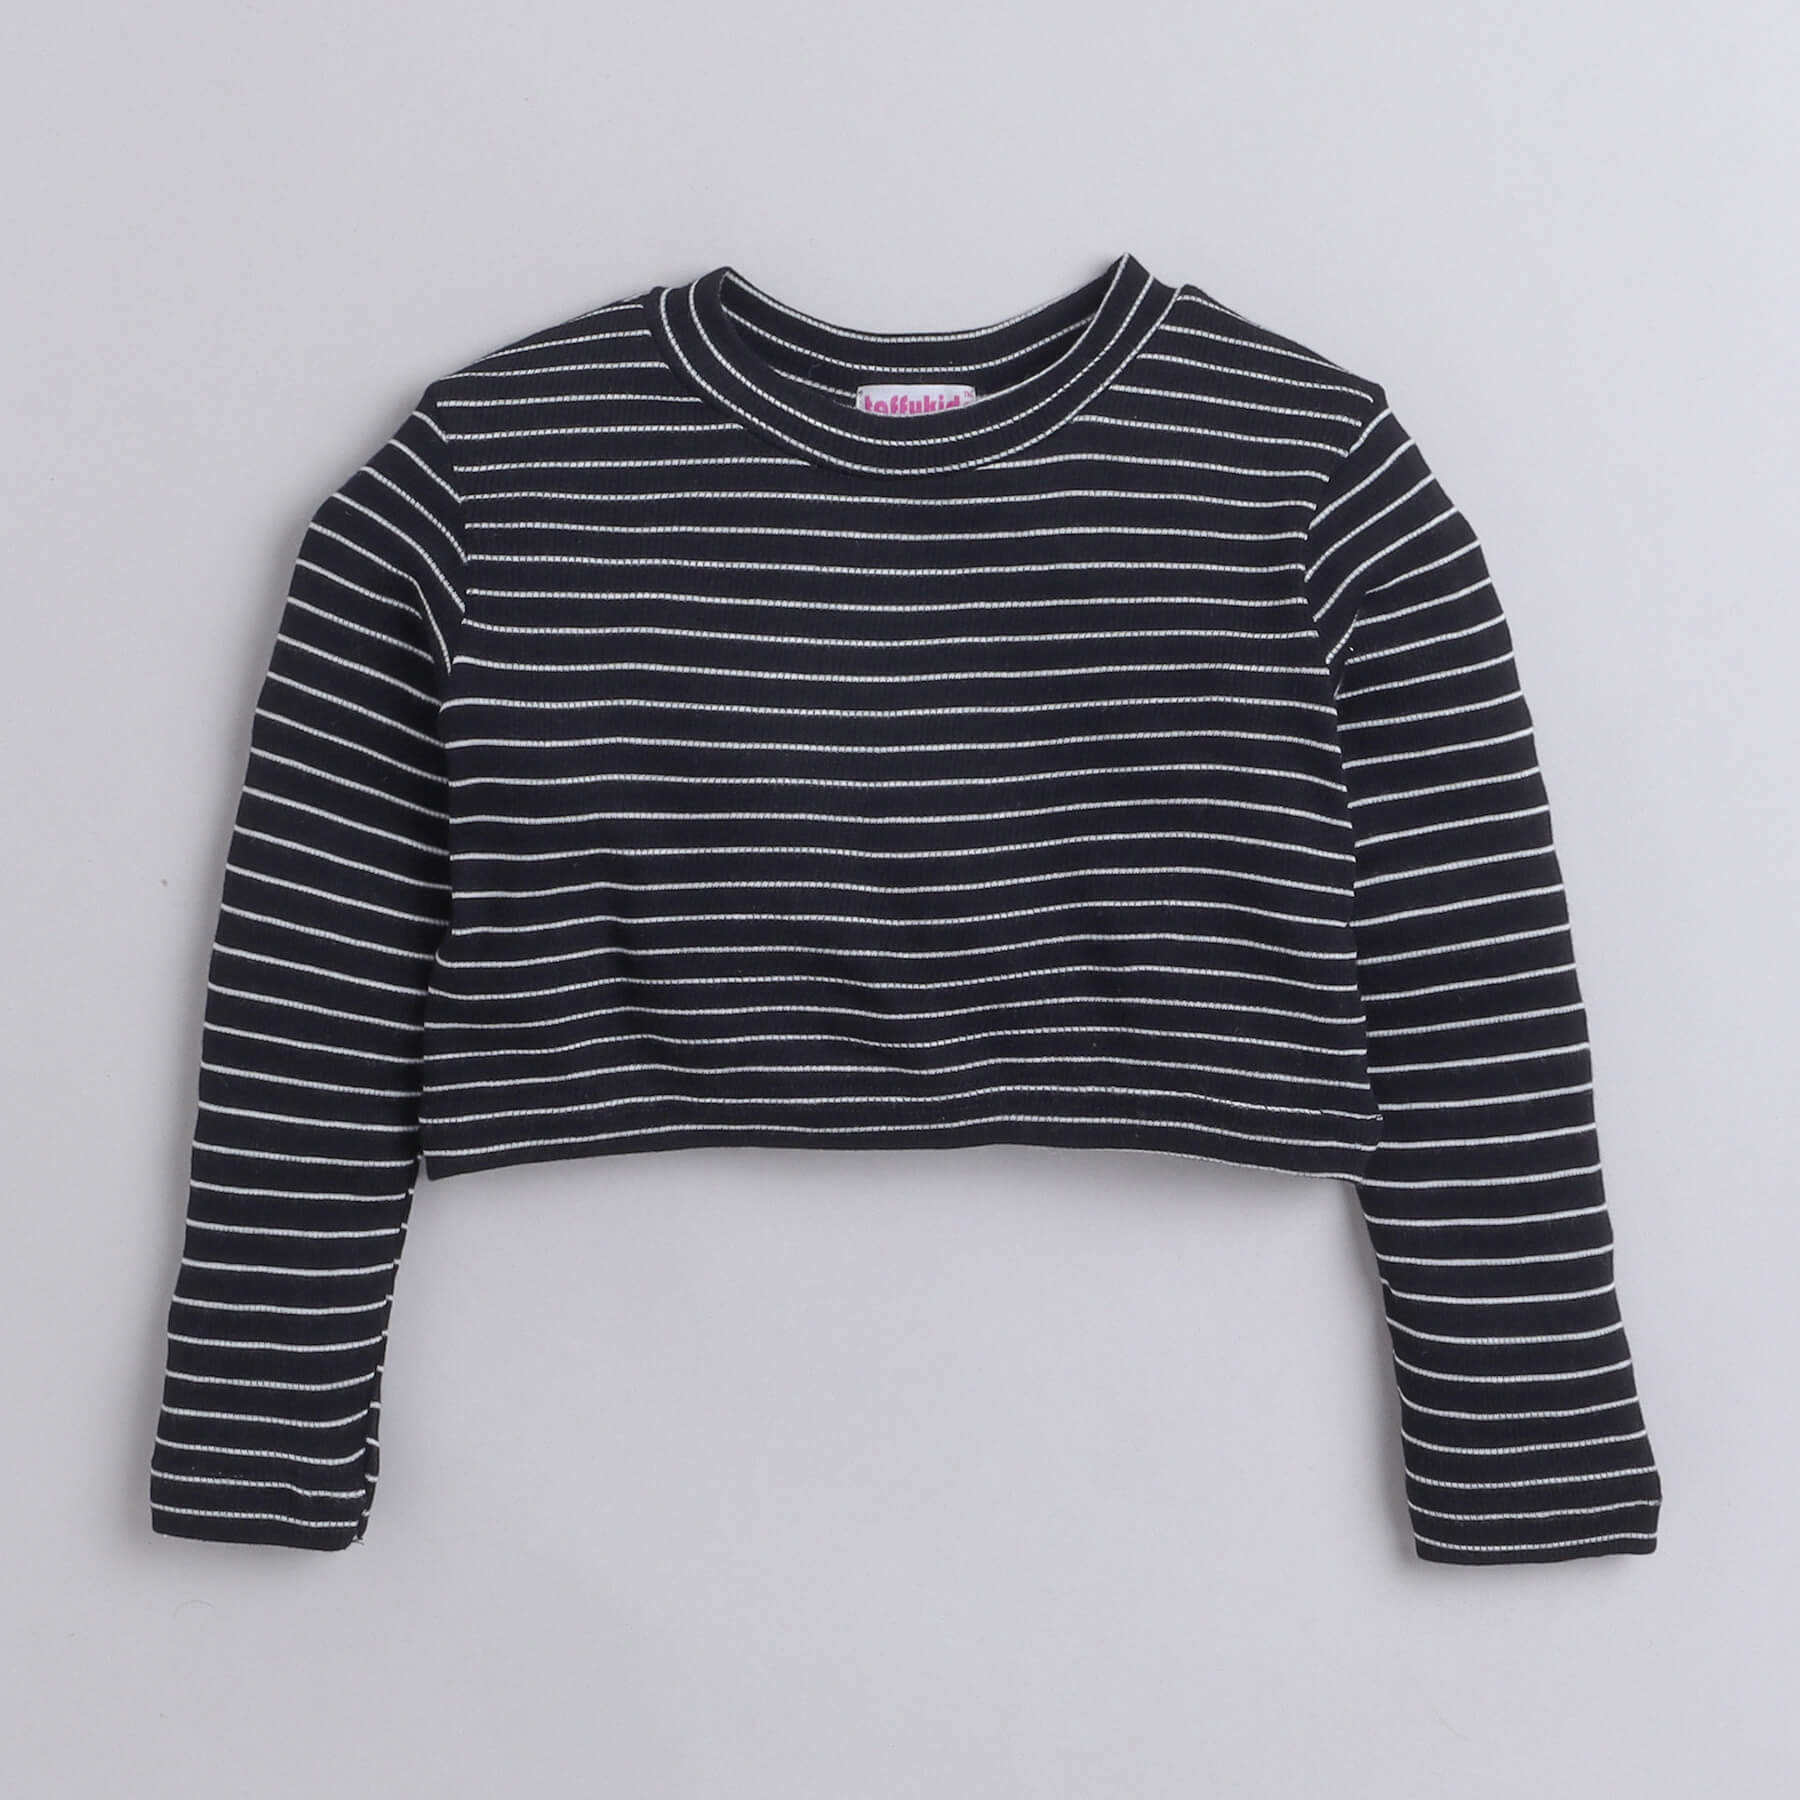 Shop Girls Black White Stripes Full Sleeve Crop Top And Short Skirt Set Online